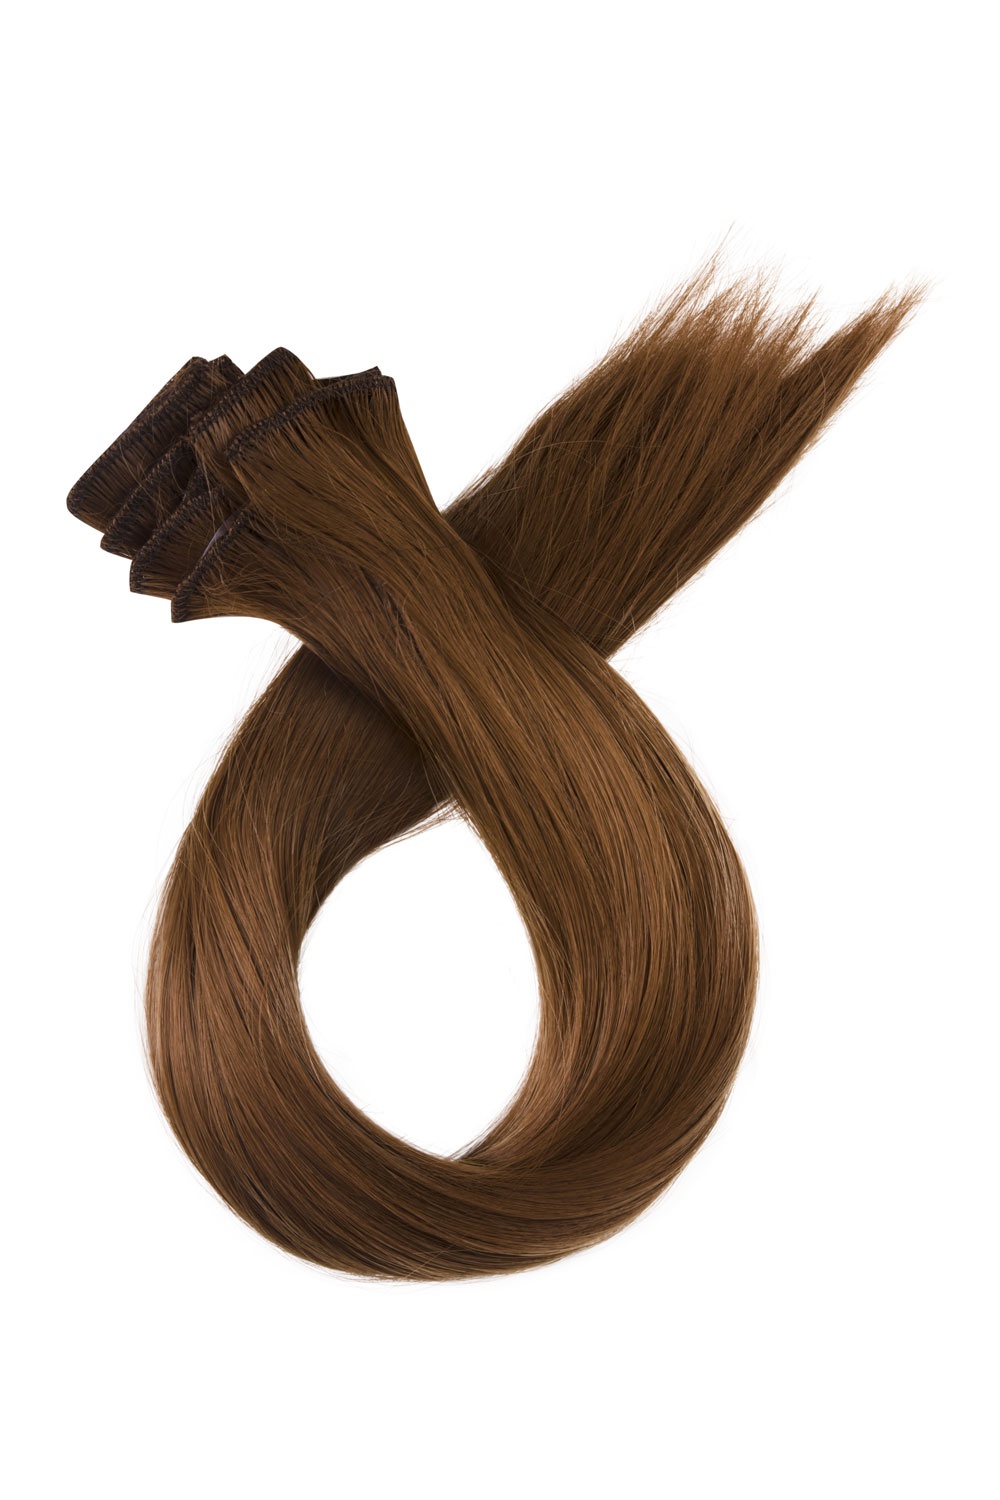 Svetlo hnedé clip in vlasy, 70cm, 180g, farba 12